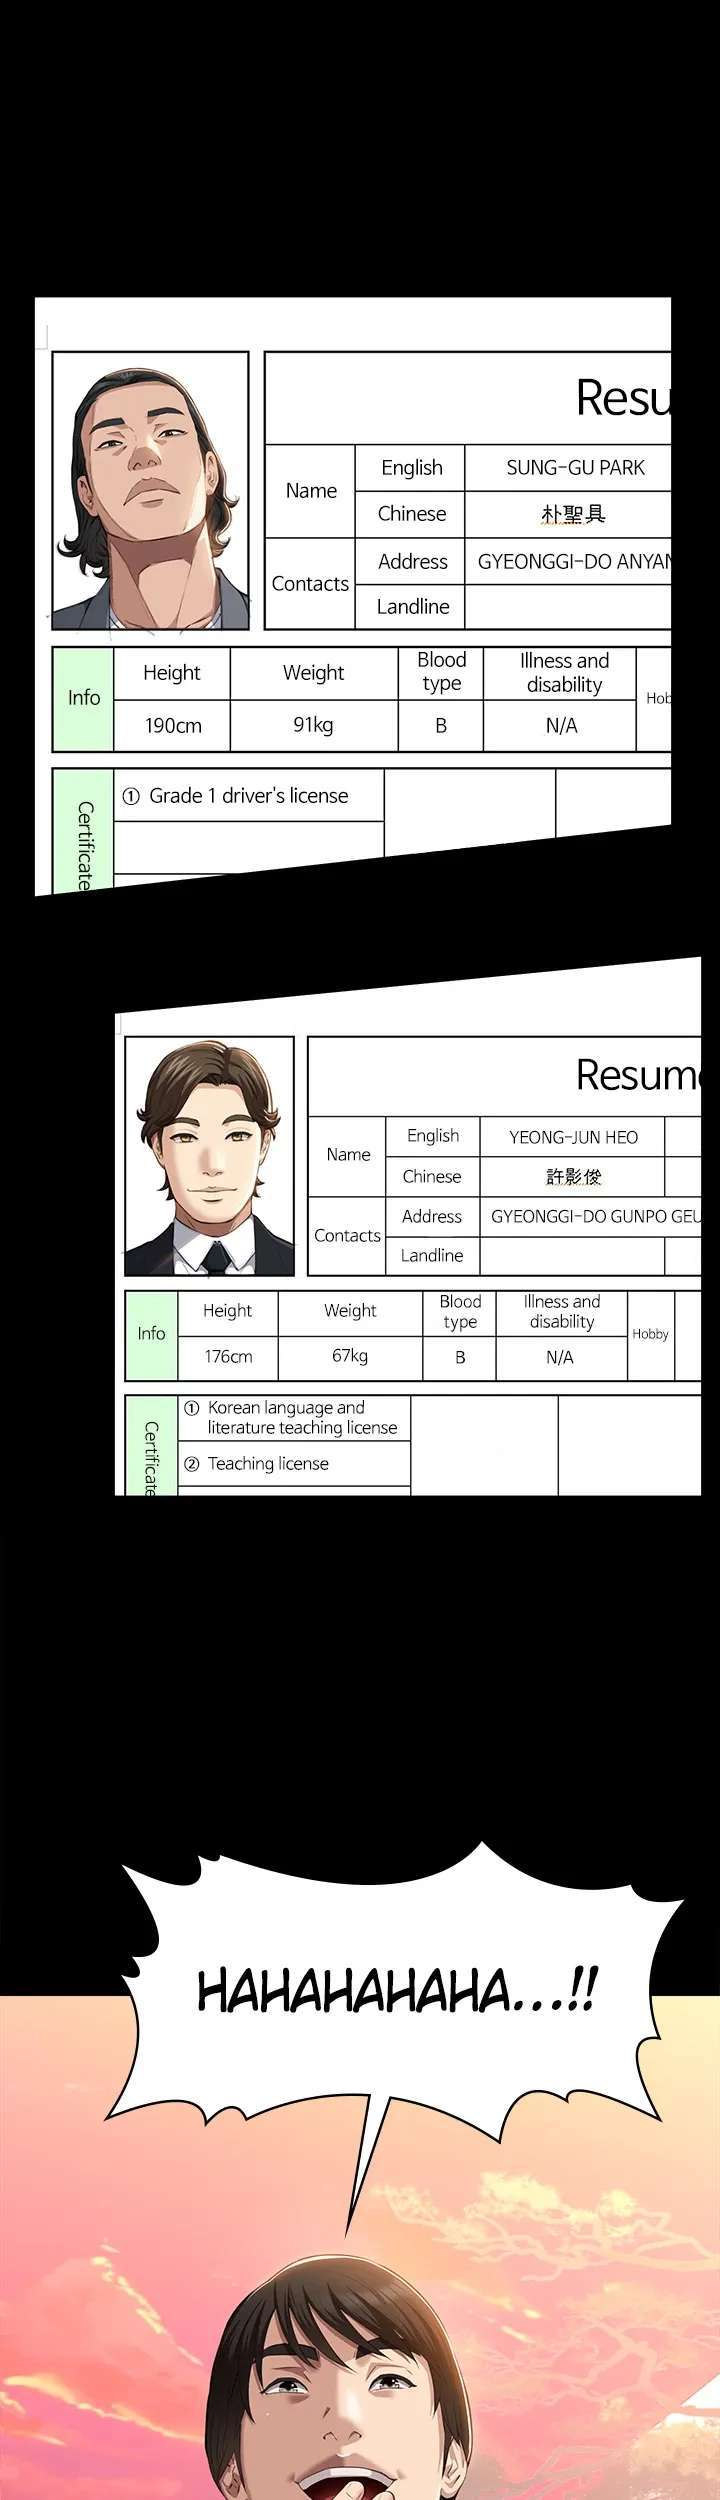 Resume image